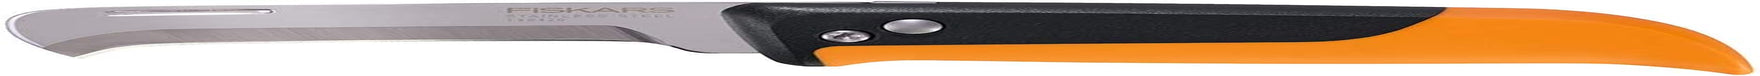 Fiskars, Fiskars 340140-1001 Folding Produce Harvesting Knife, Orange/Black